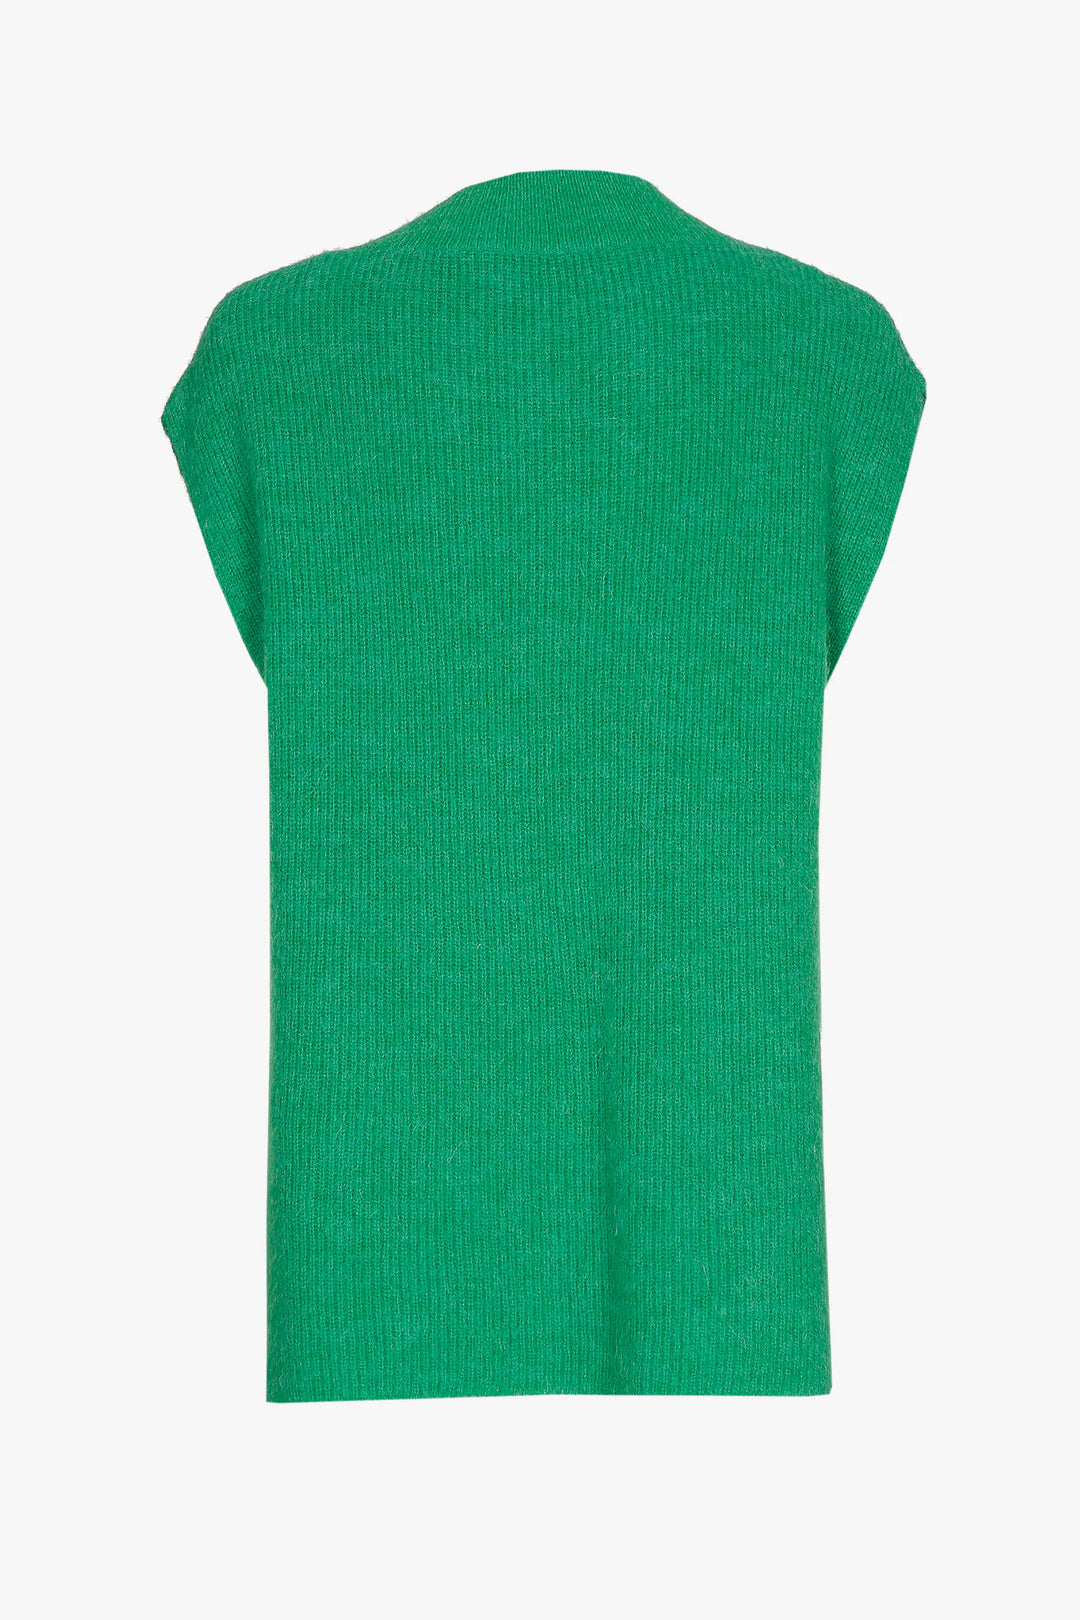 Irish green debardeur van alpaca mix - xandres - - grote maten - dameskleding - kledingwinkel - herent - leuven